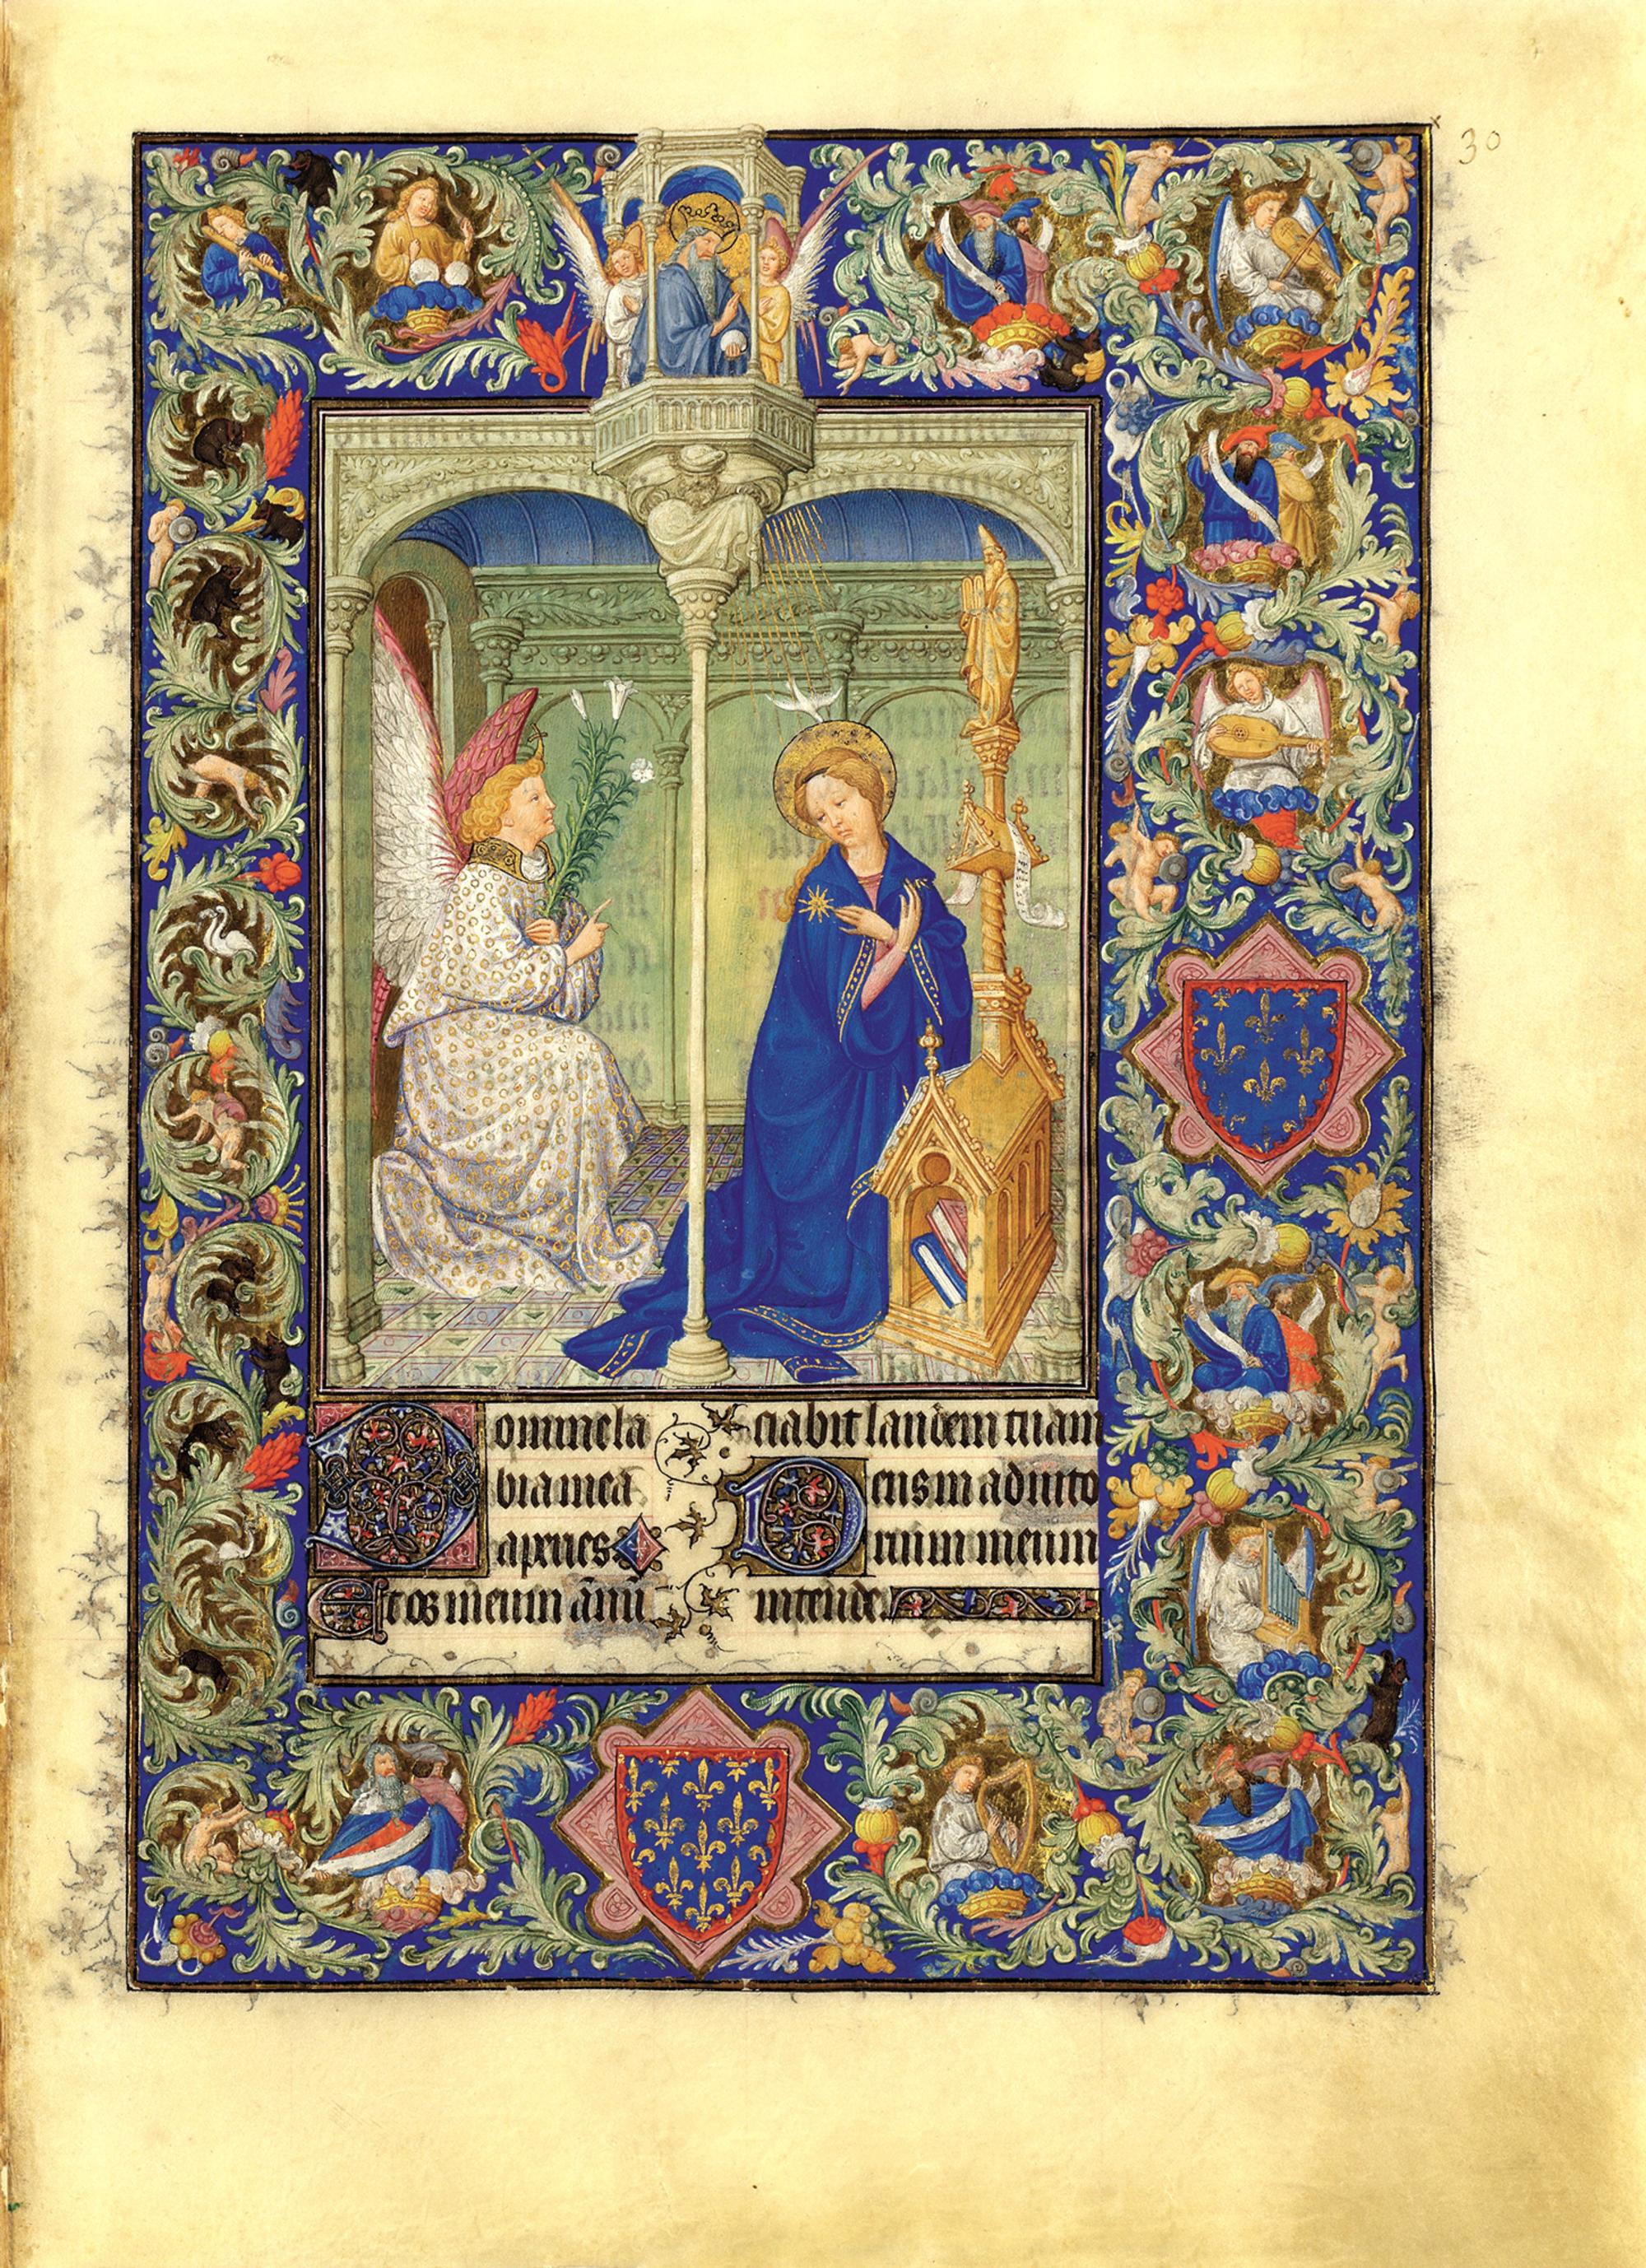 Folio 30r | The Art of Illumination